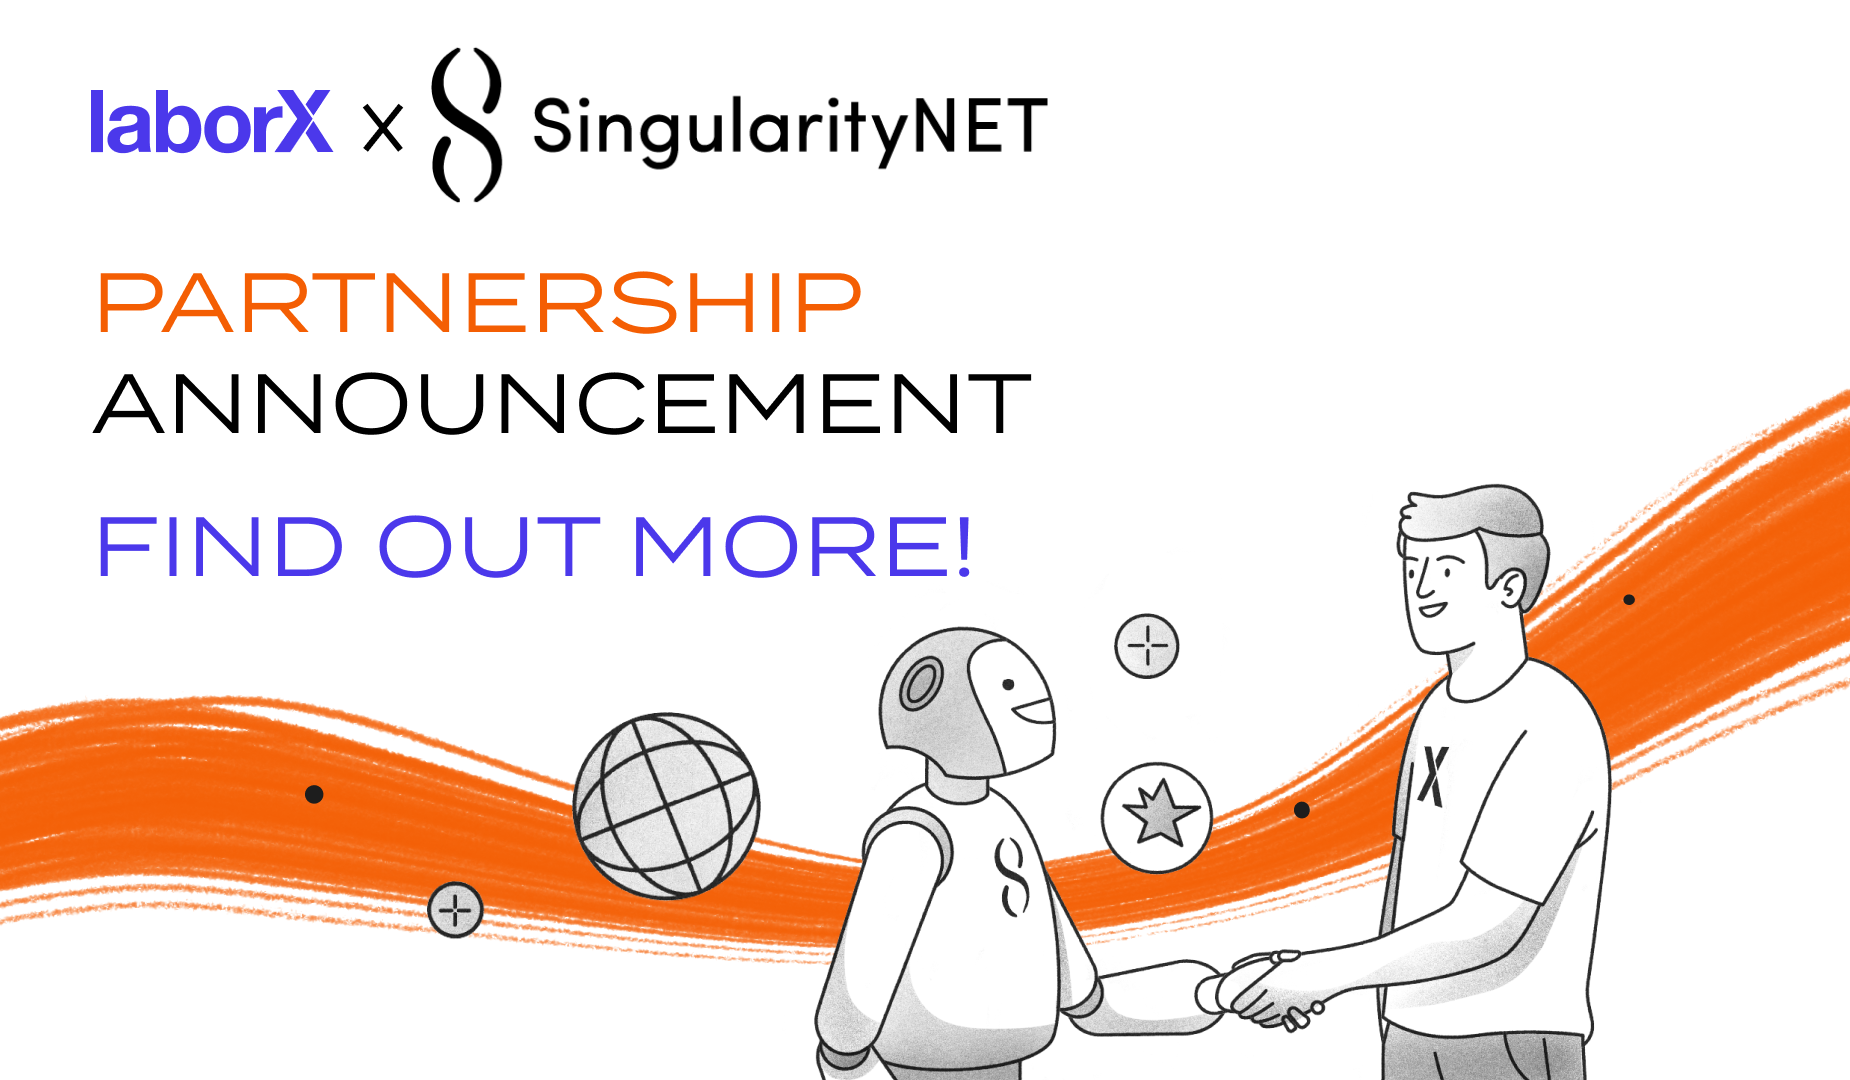 LaborX partners with SingularityNET